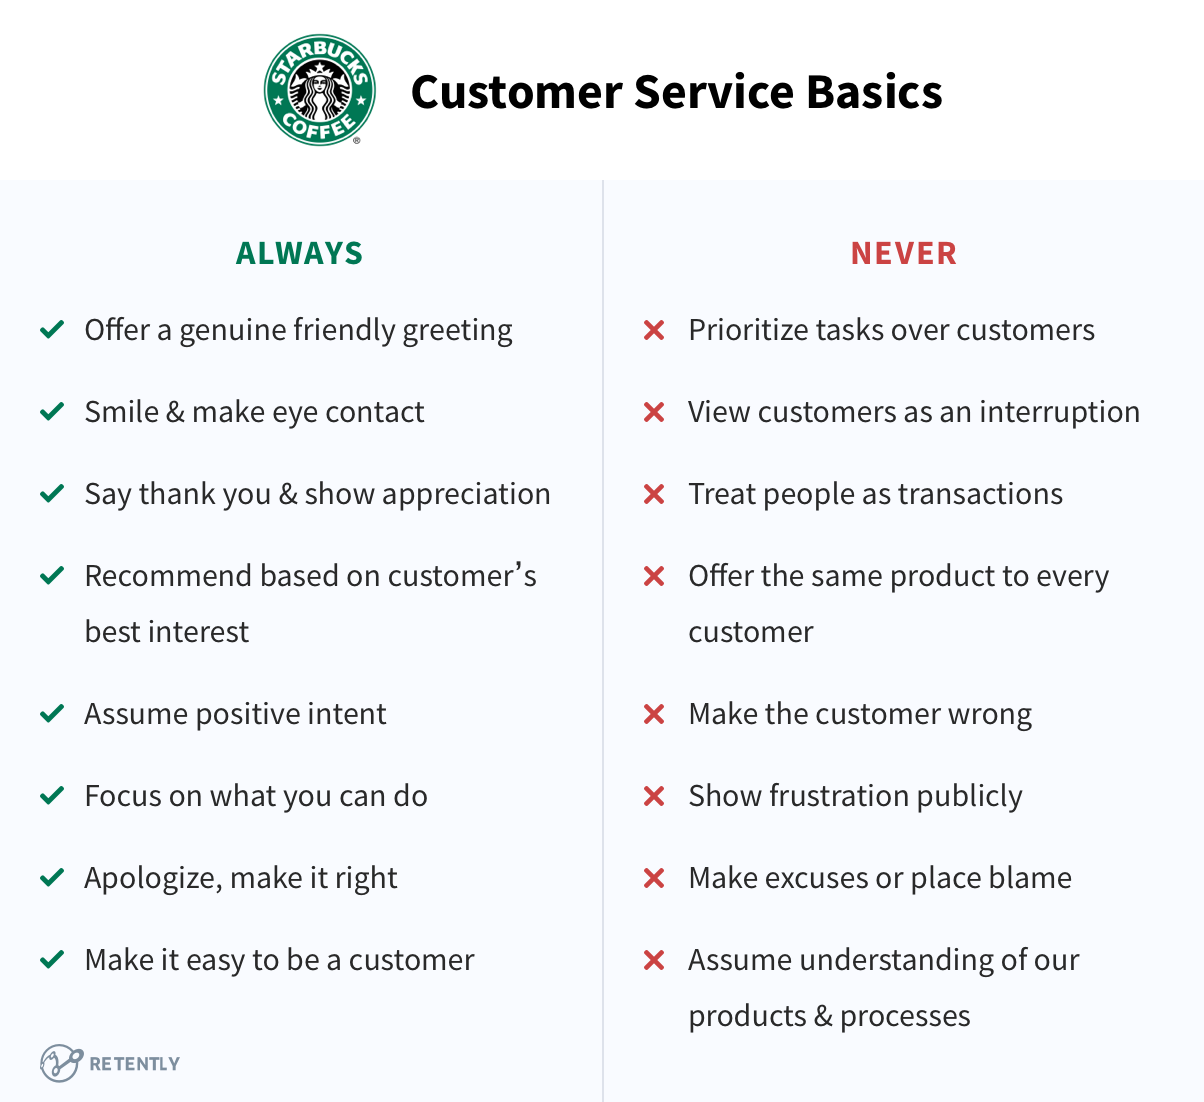 Basic Customer Service Expectations at Starbucks